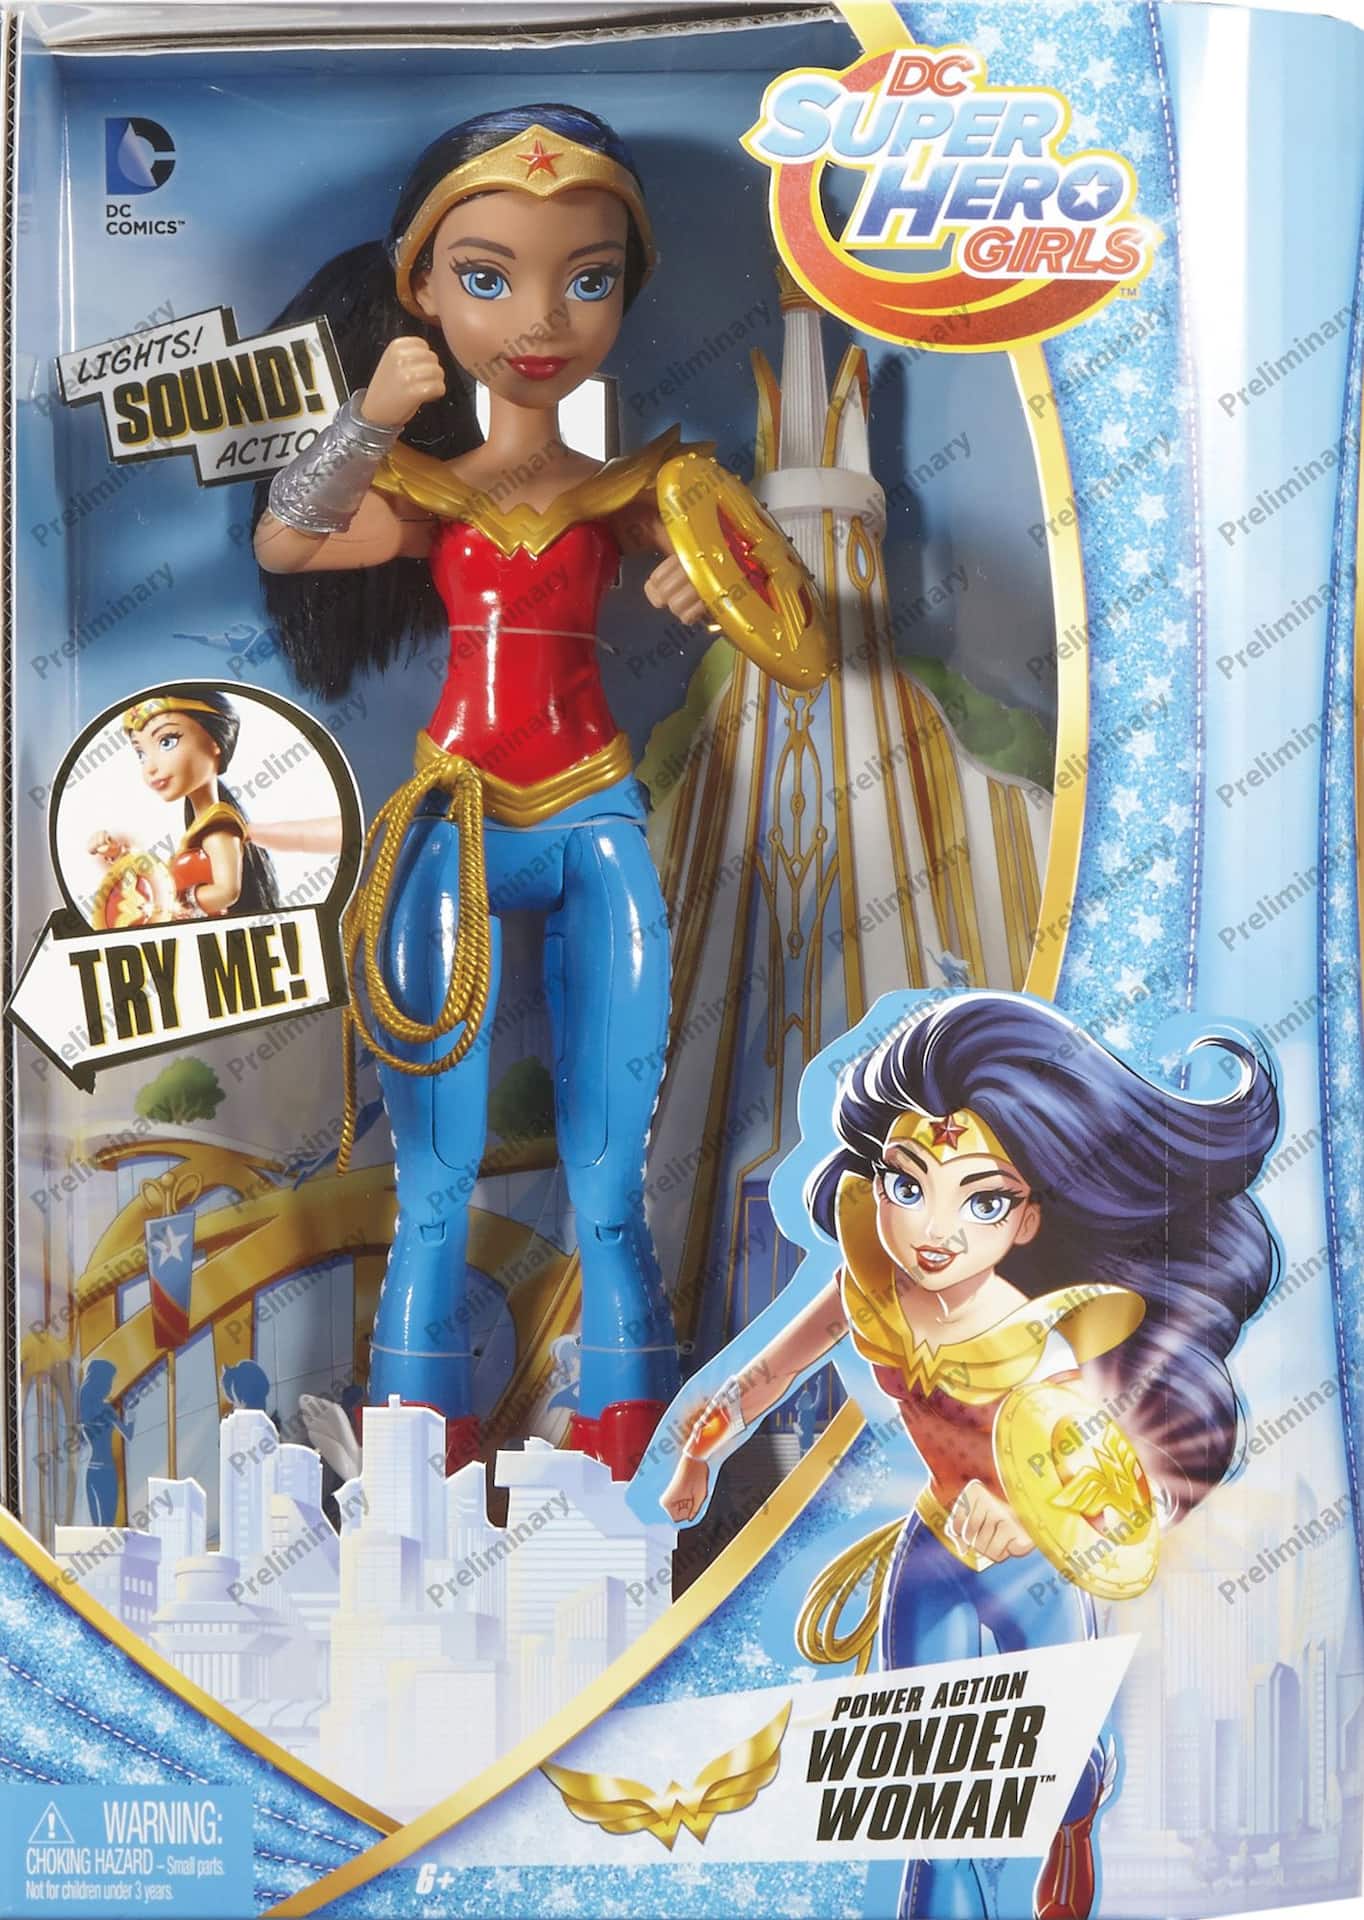 DC Superhero Girl Power Action Figure, Wonder Woman, English